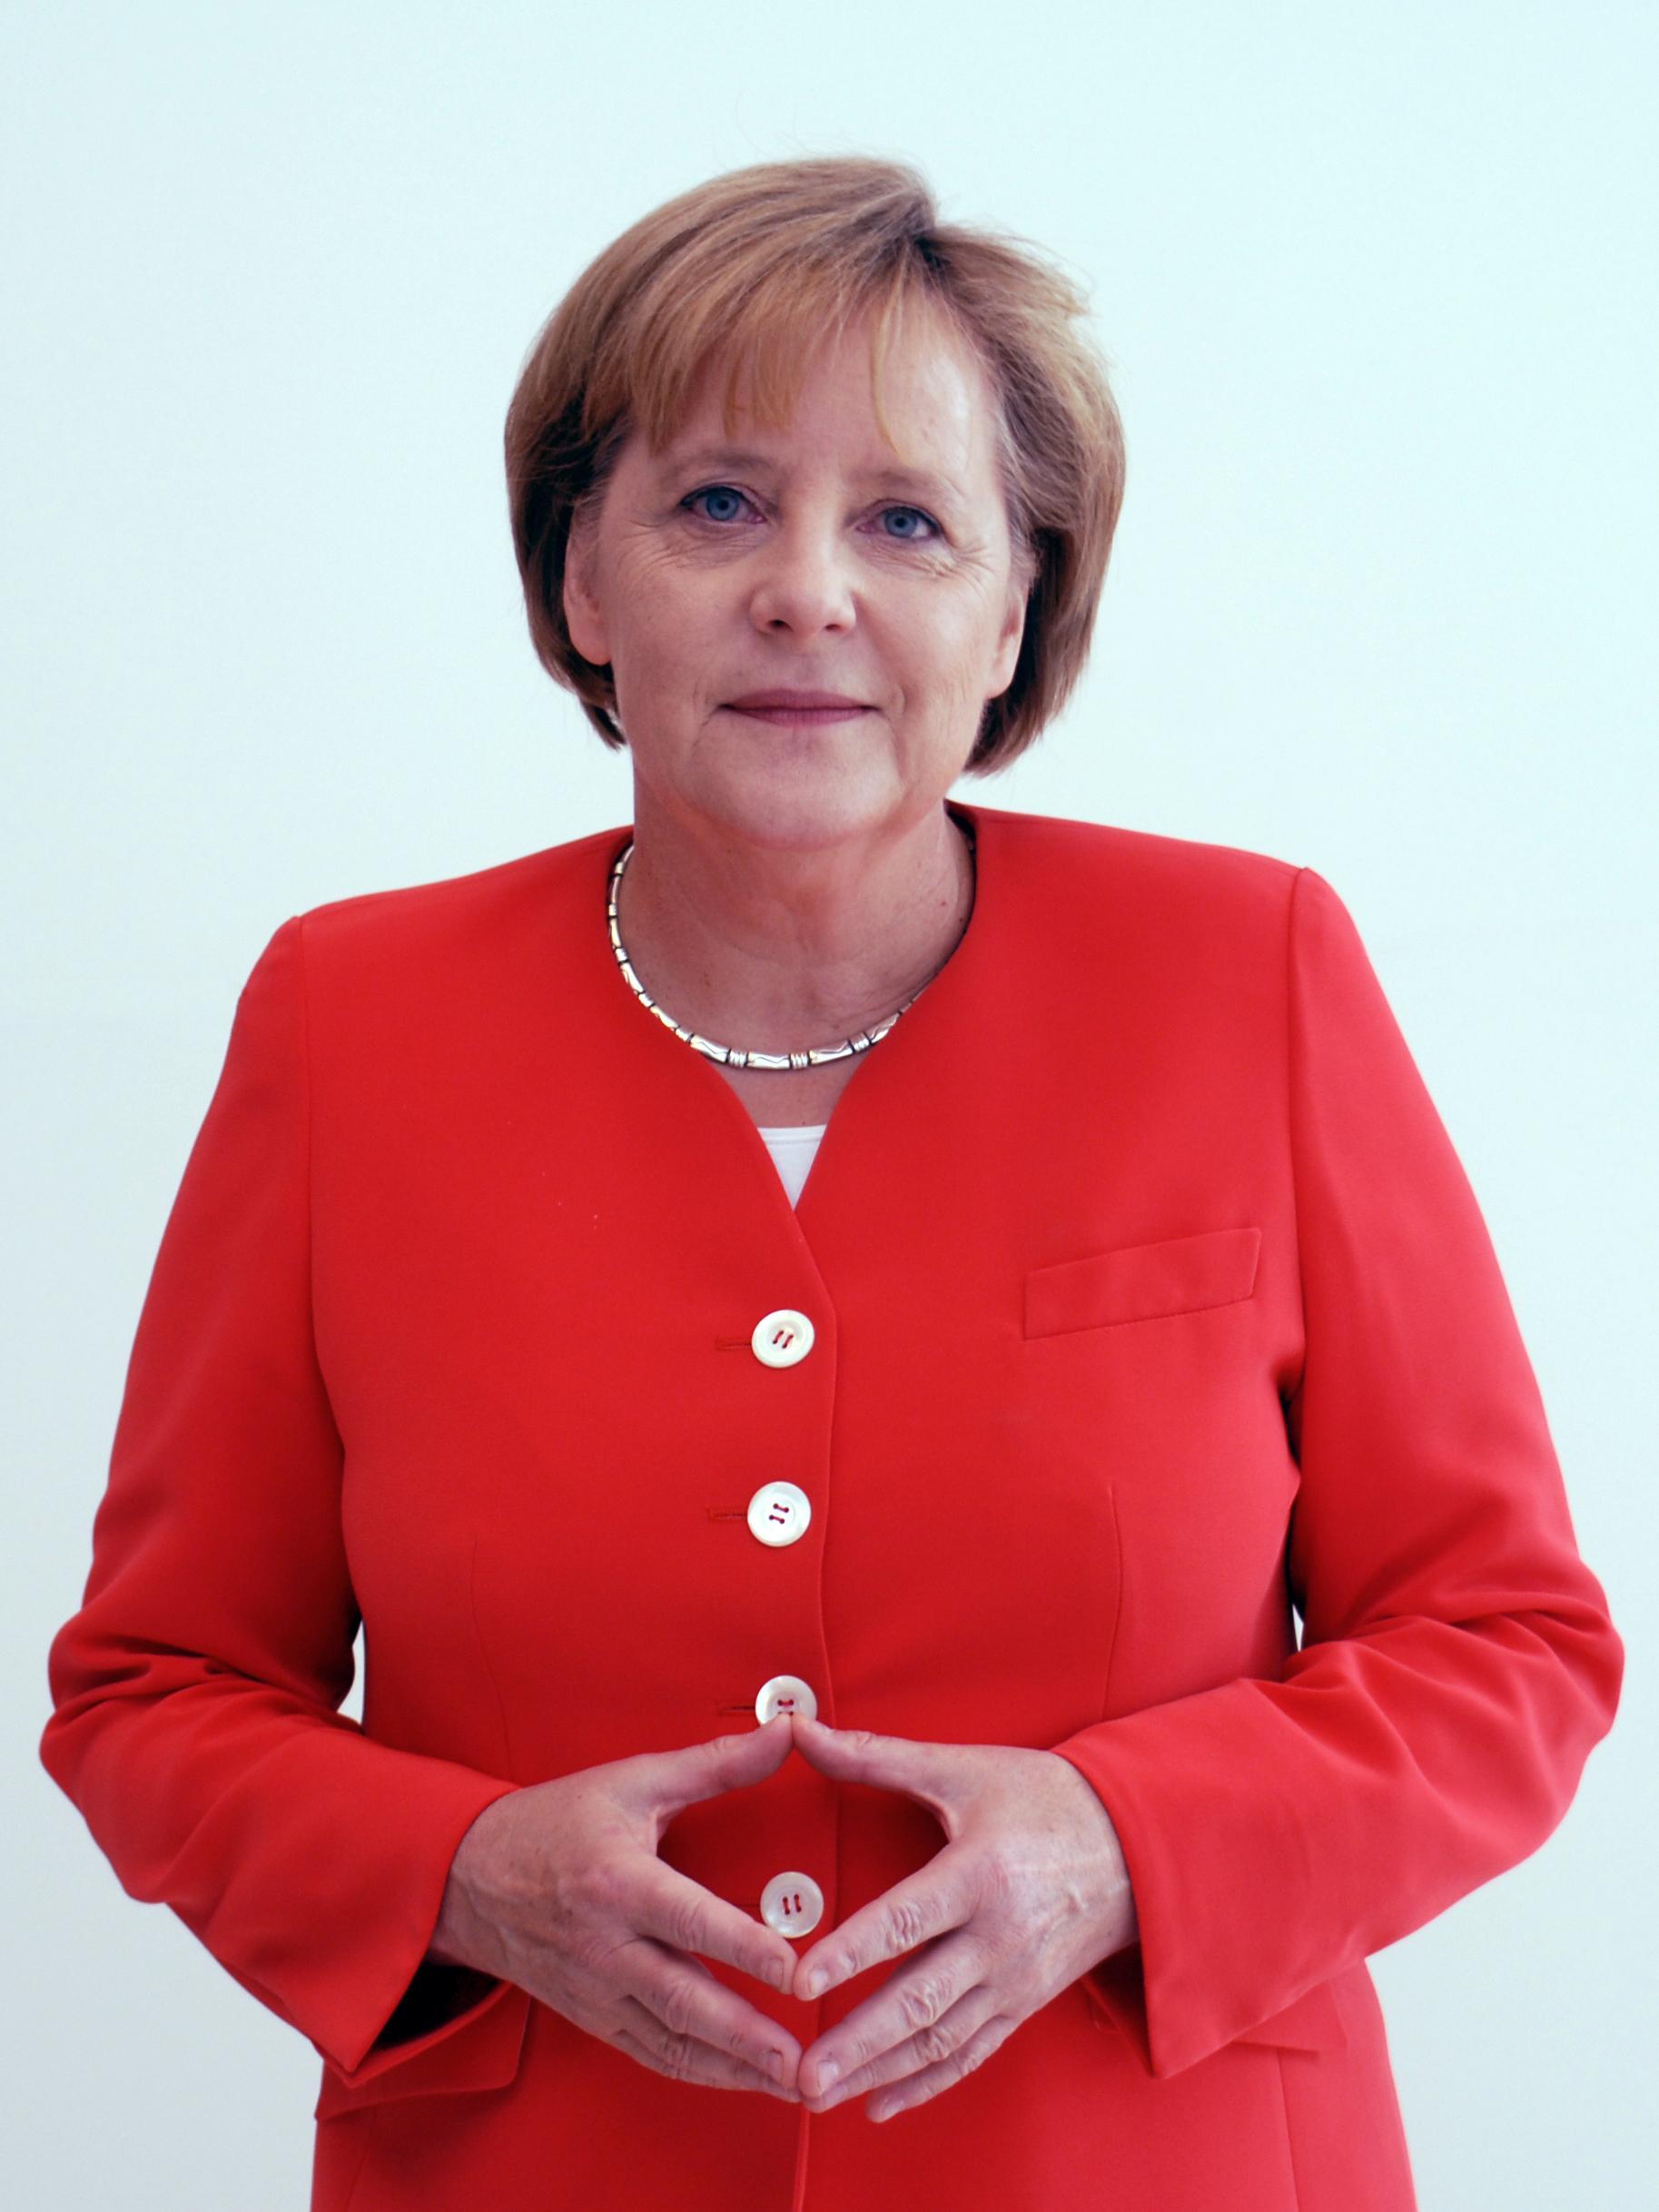 Women in History image Angela Merkel HD wallpaper and background